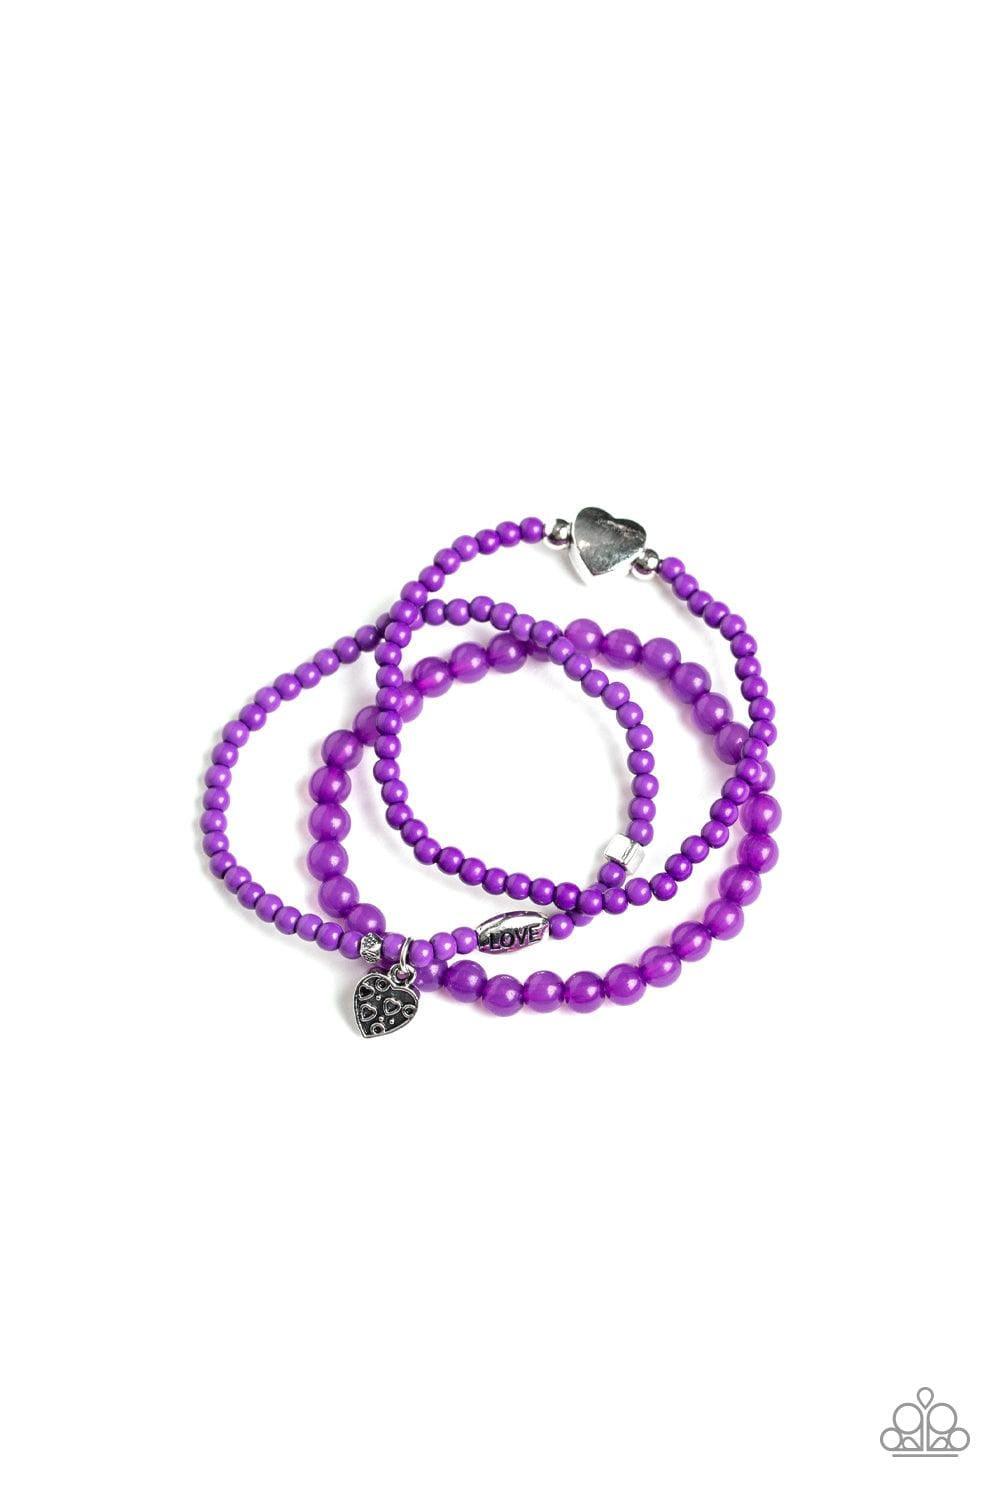 Paparazzi Accessories - Really Romantic - Purple Bracelet - Bling by JessieK